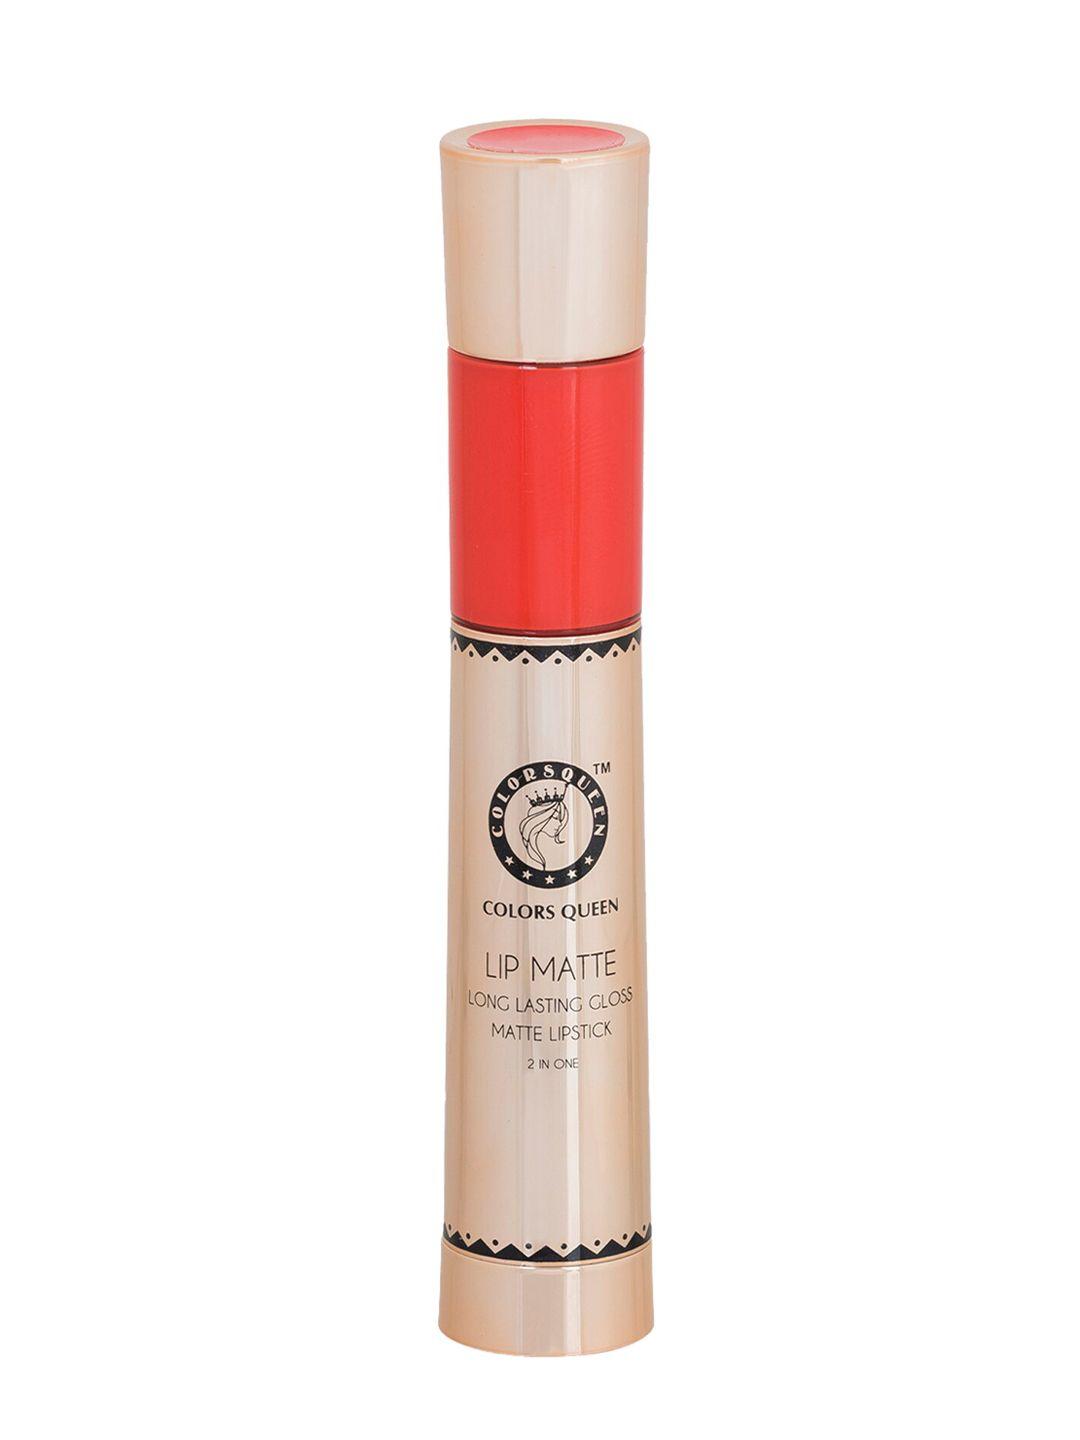 colors queen lip matte long lasting gloss 2 in 1 lipstick 8 g - orange